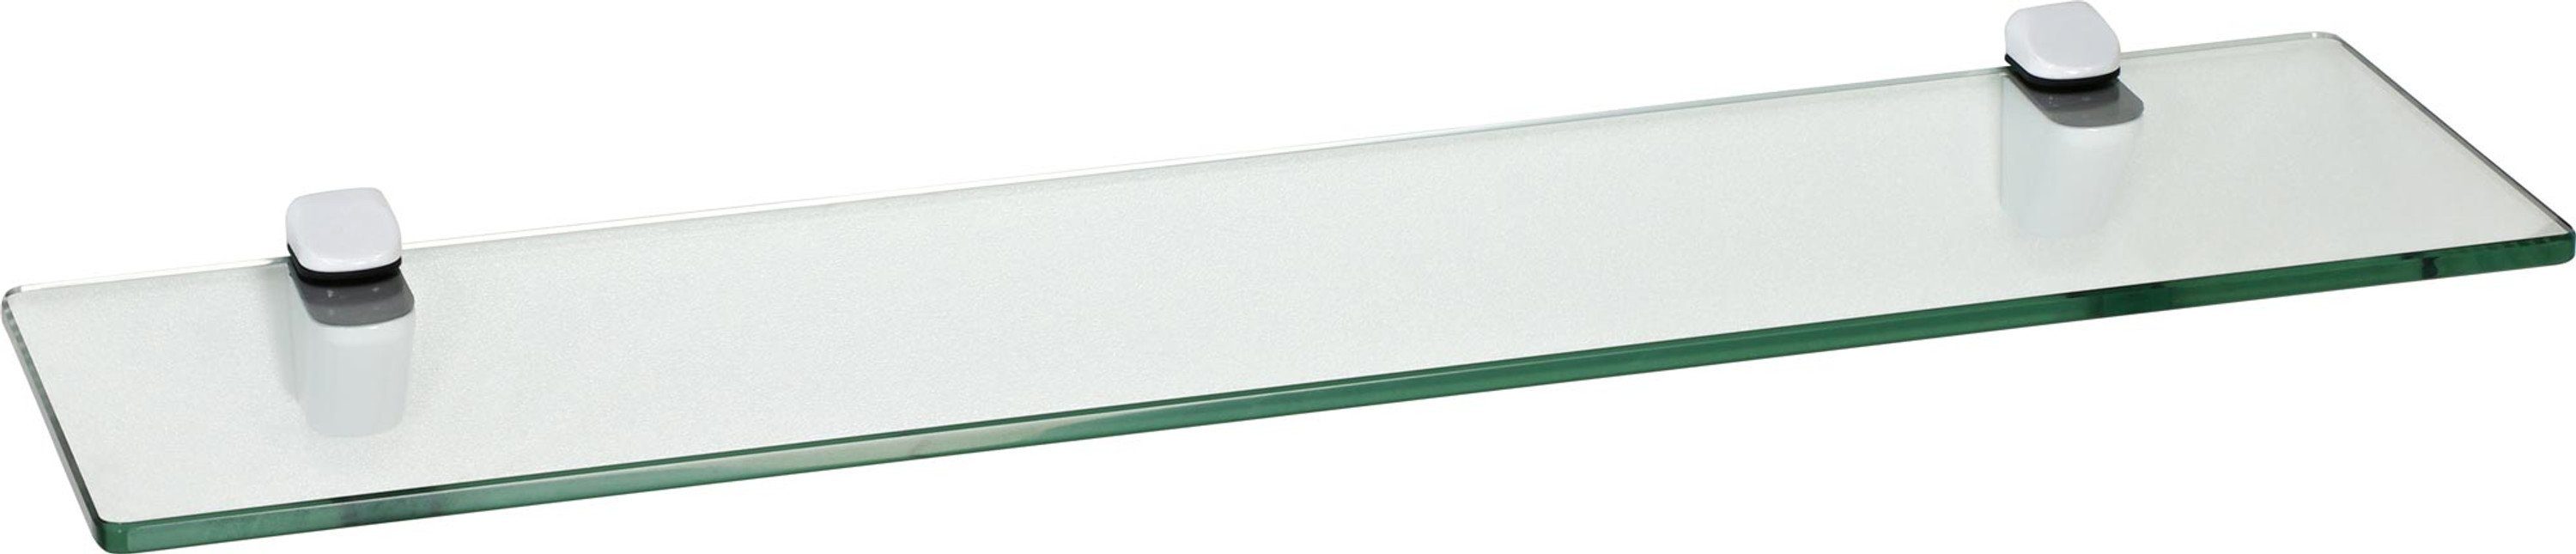 ib style Wandregal Glasregal 10mm klar 40 x 15 cm + Clip CUCALE Weiß, Glasboden aus ESG-Sicherheitsglas - Wandregal